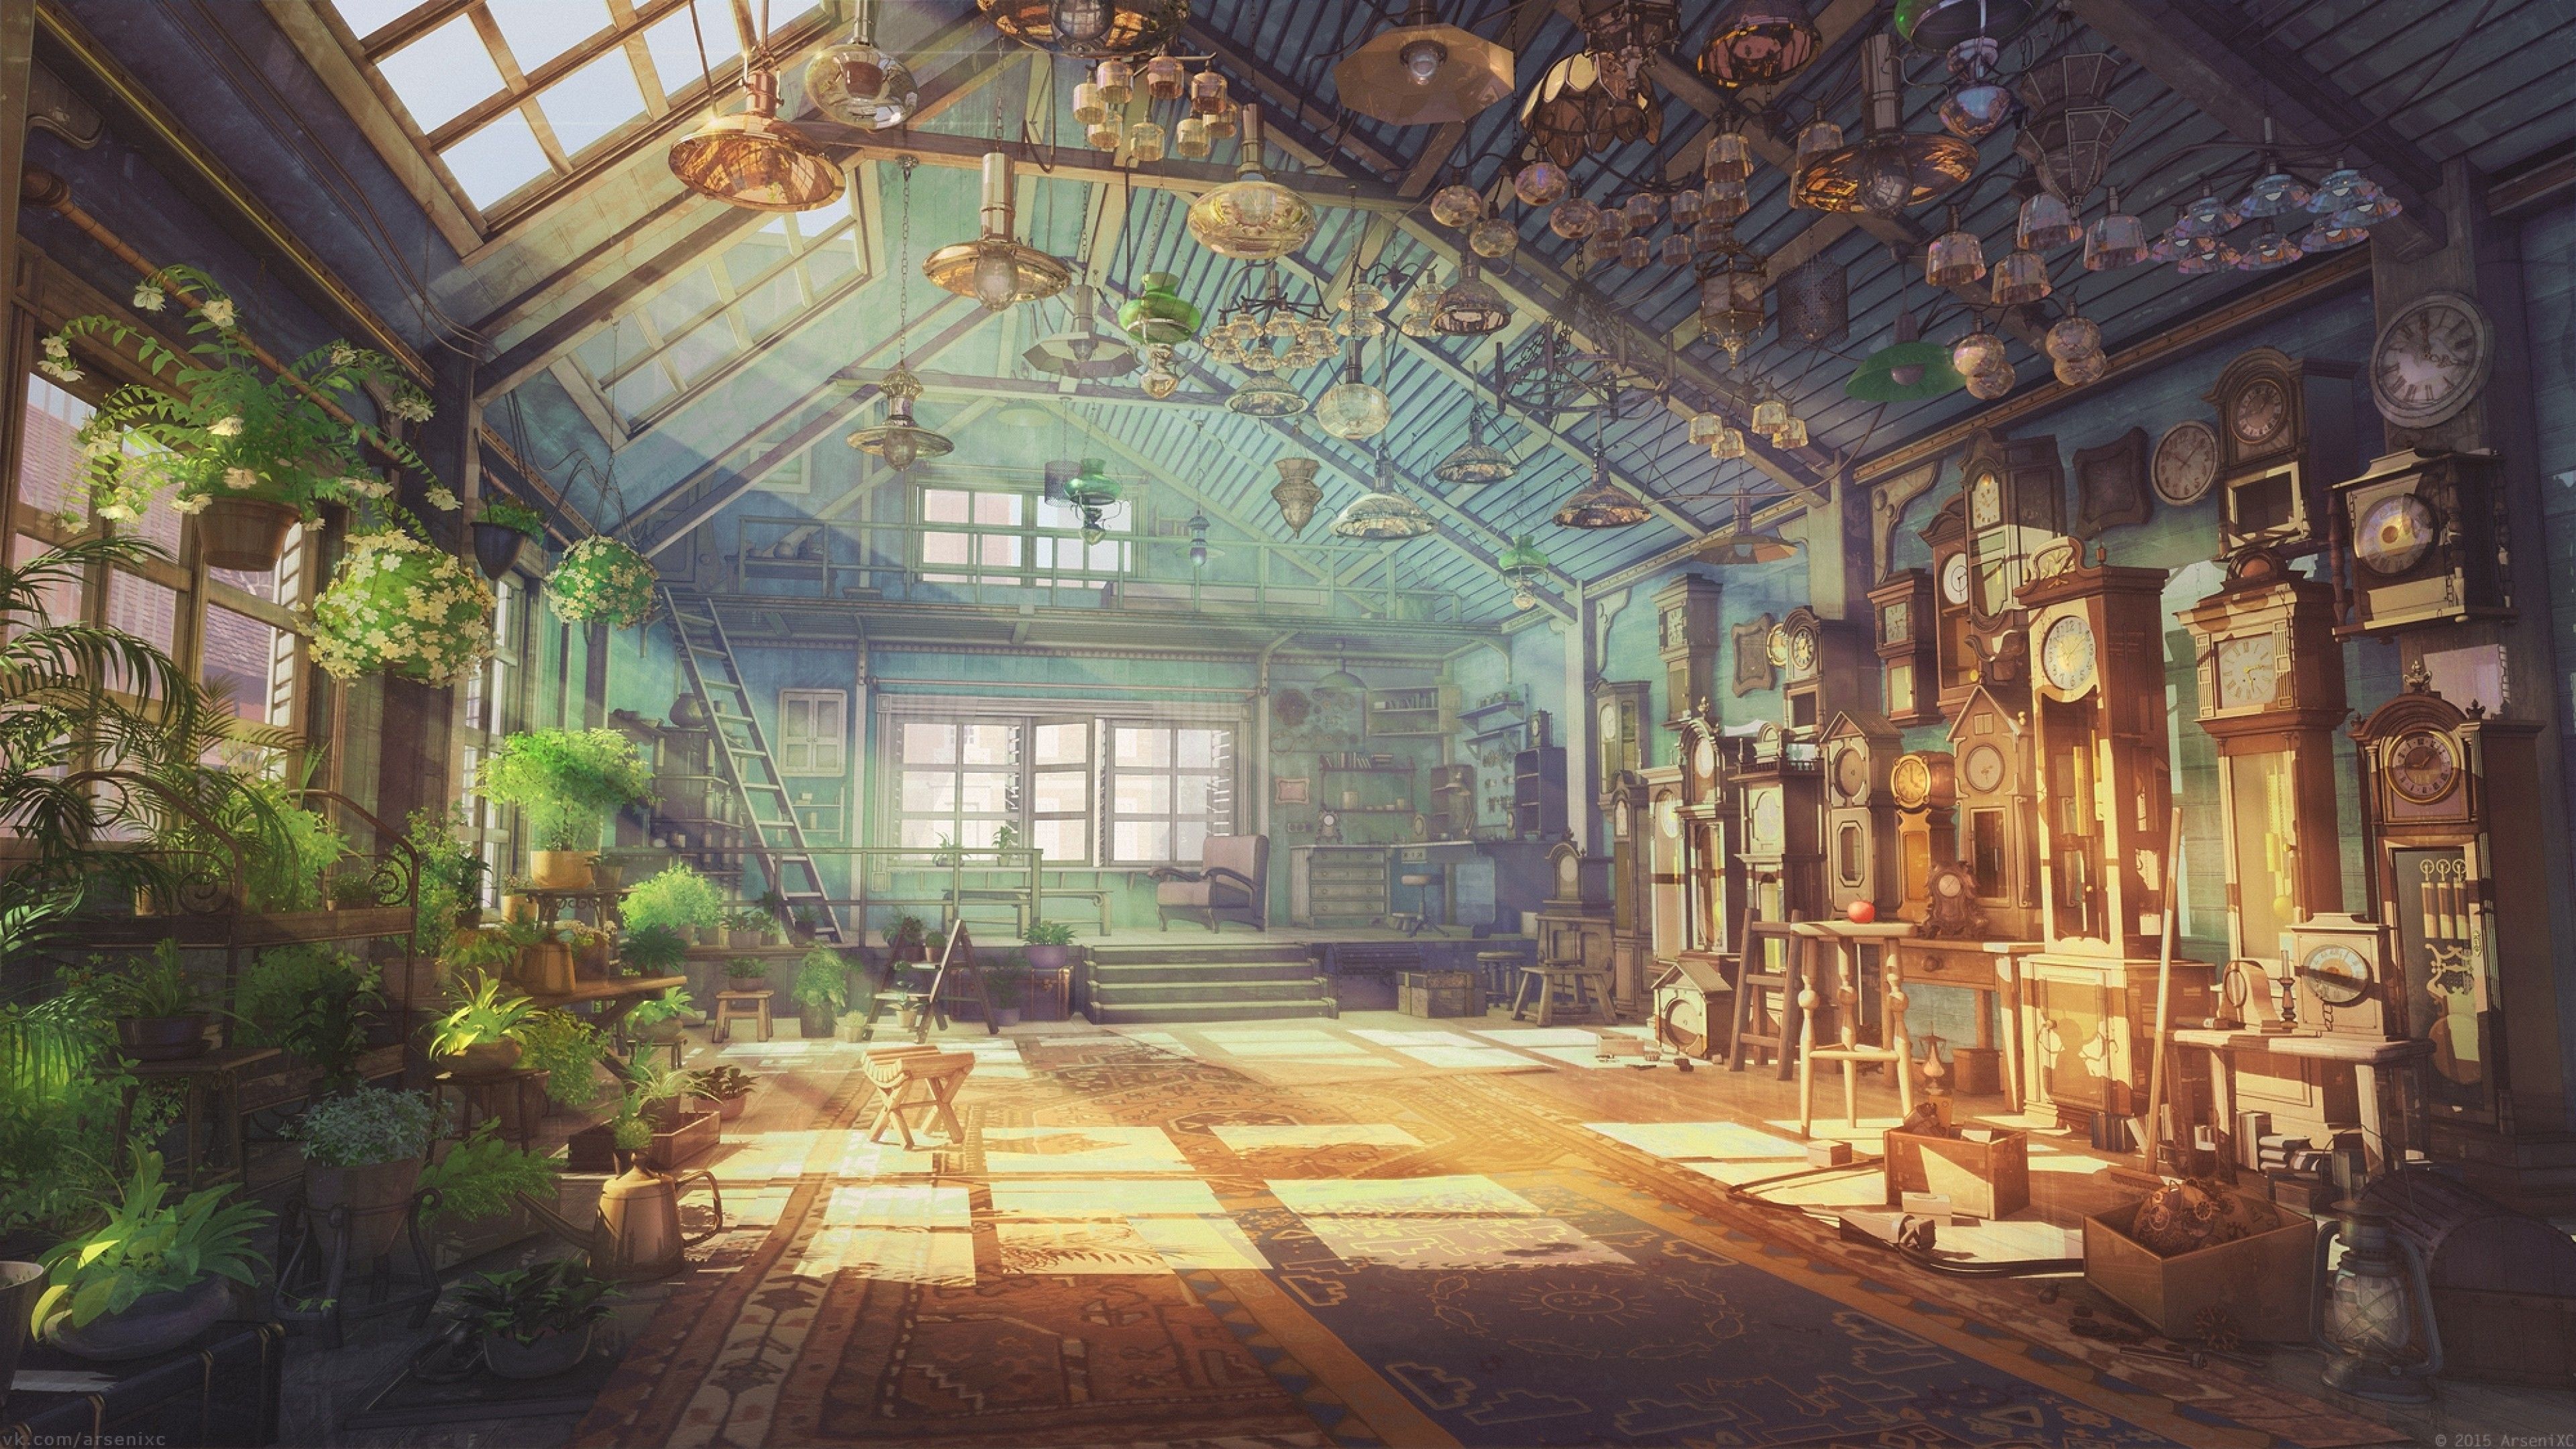 A room with many plants and clocks - Sunshine